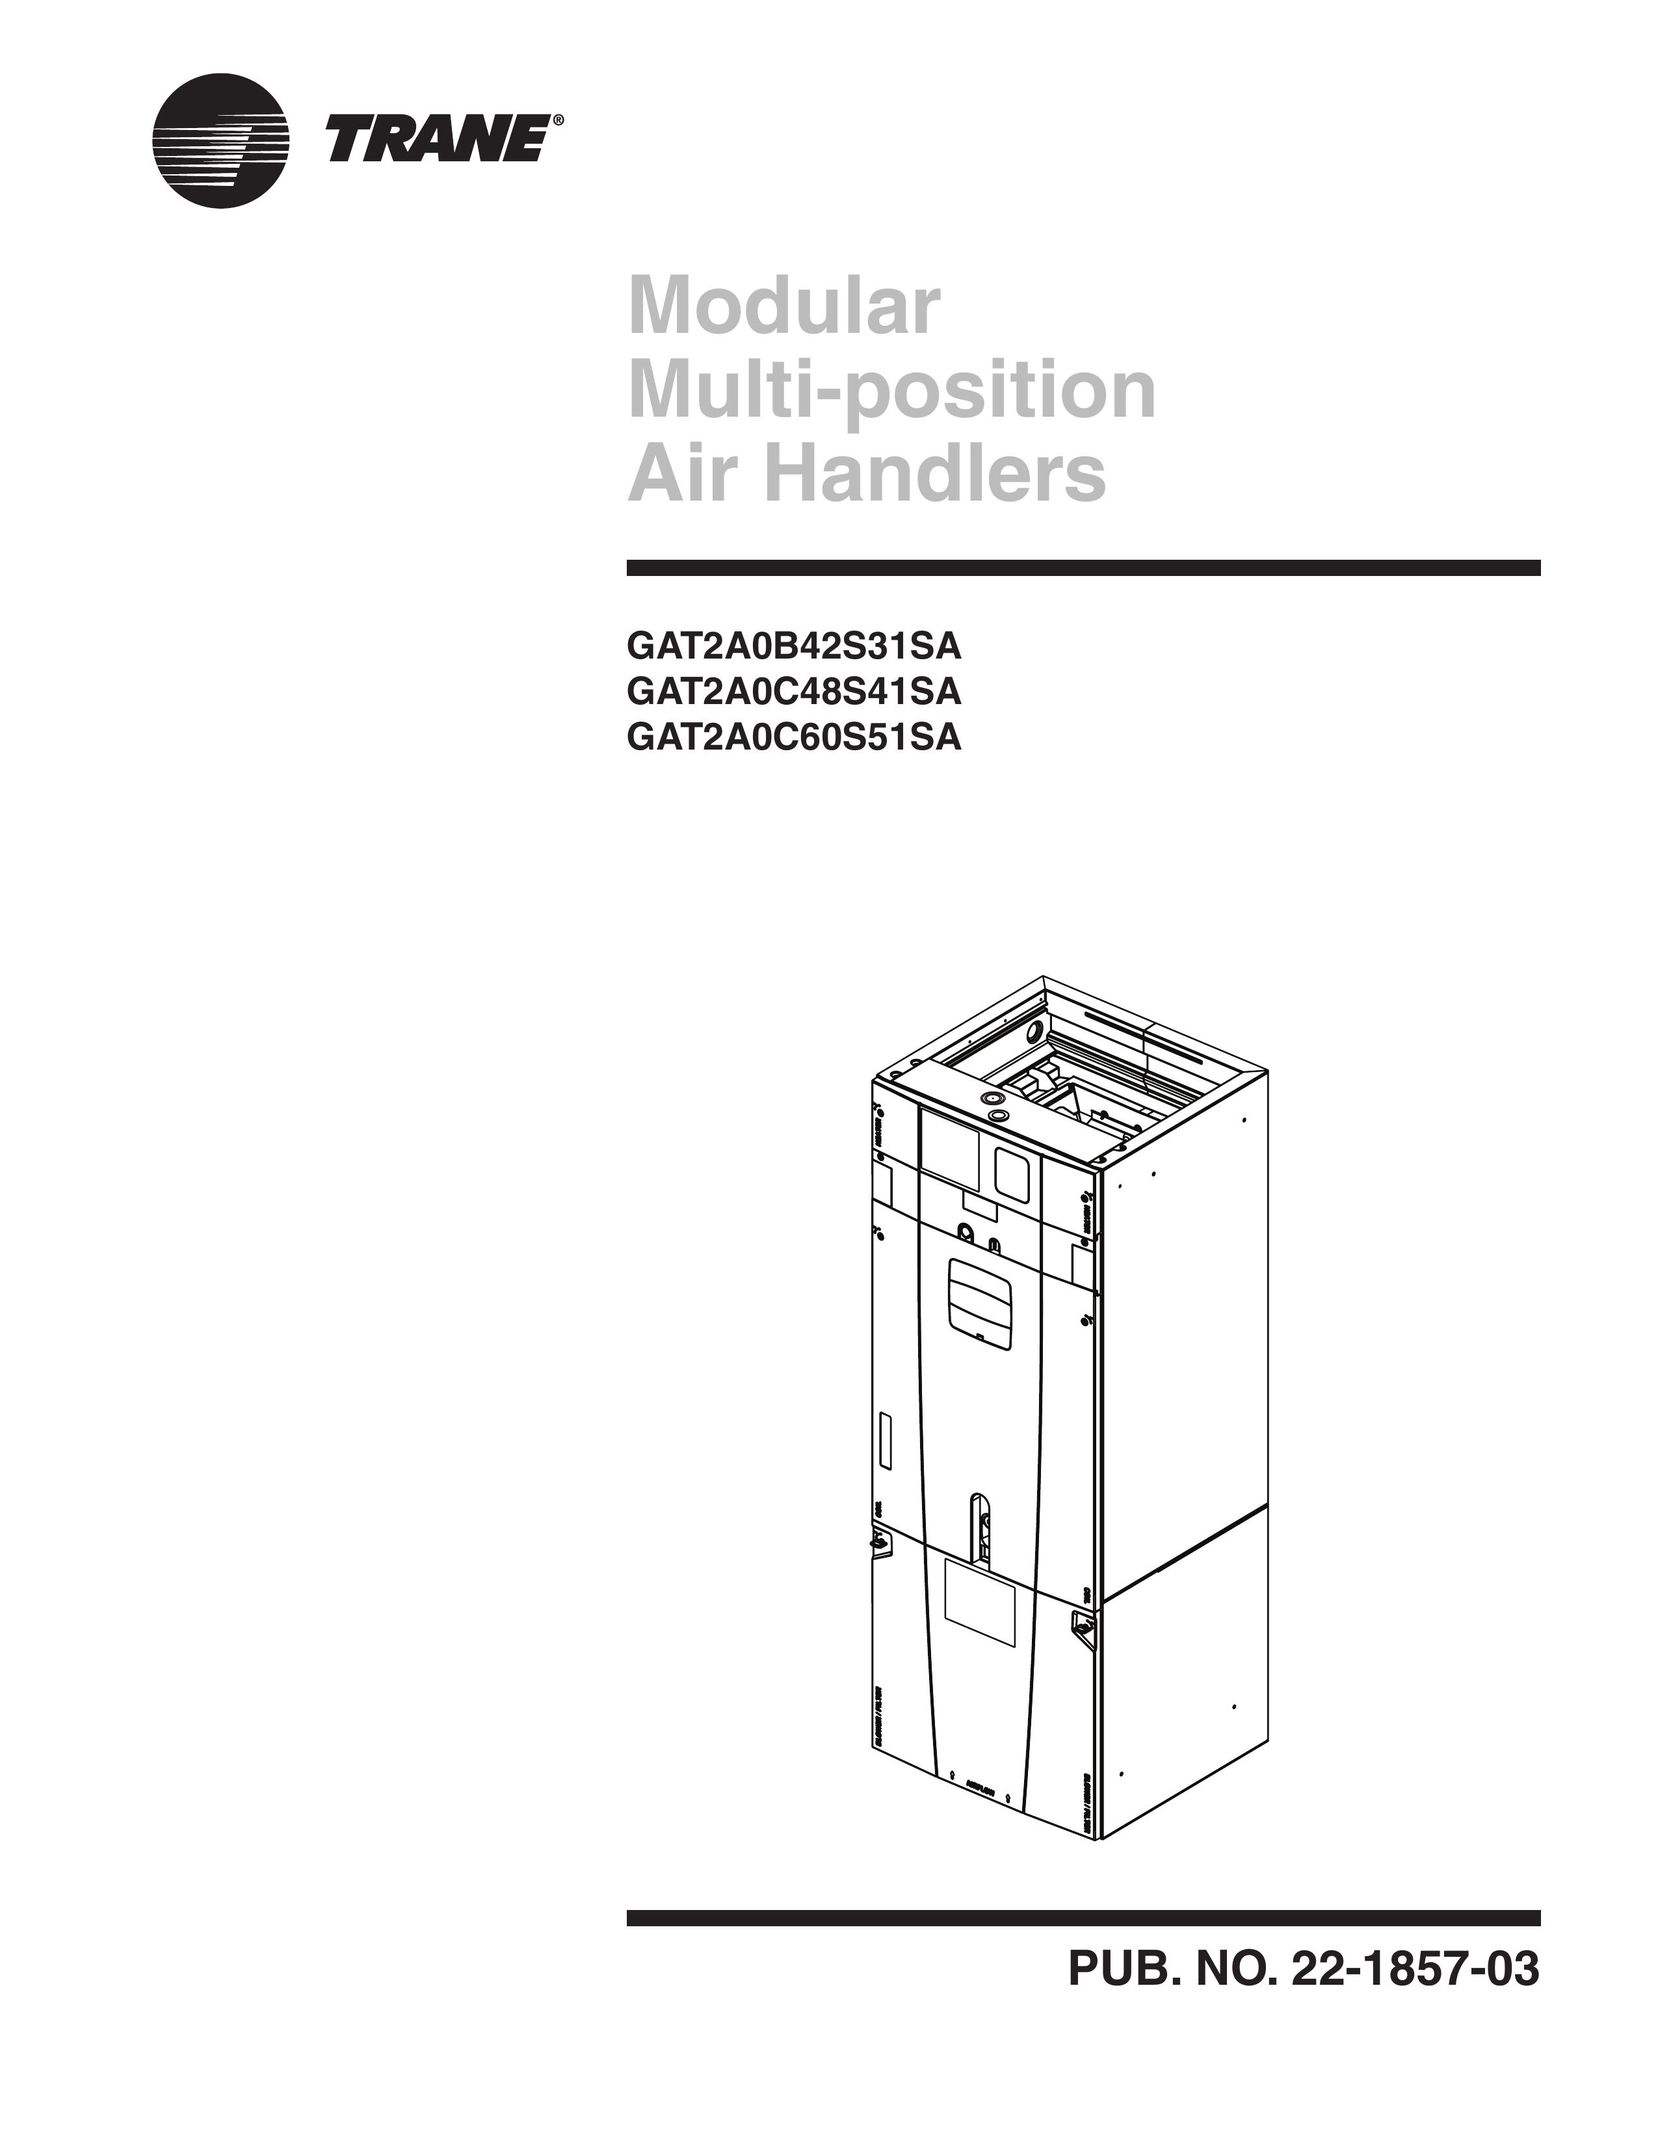 Trane GAT2A0C60S51SA Air Conditioner User Manual